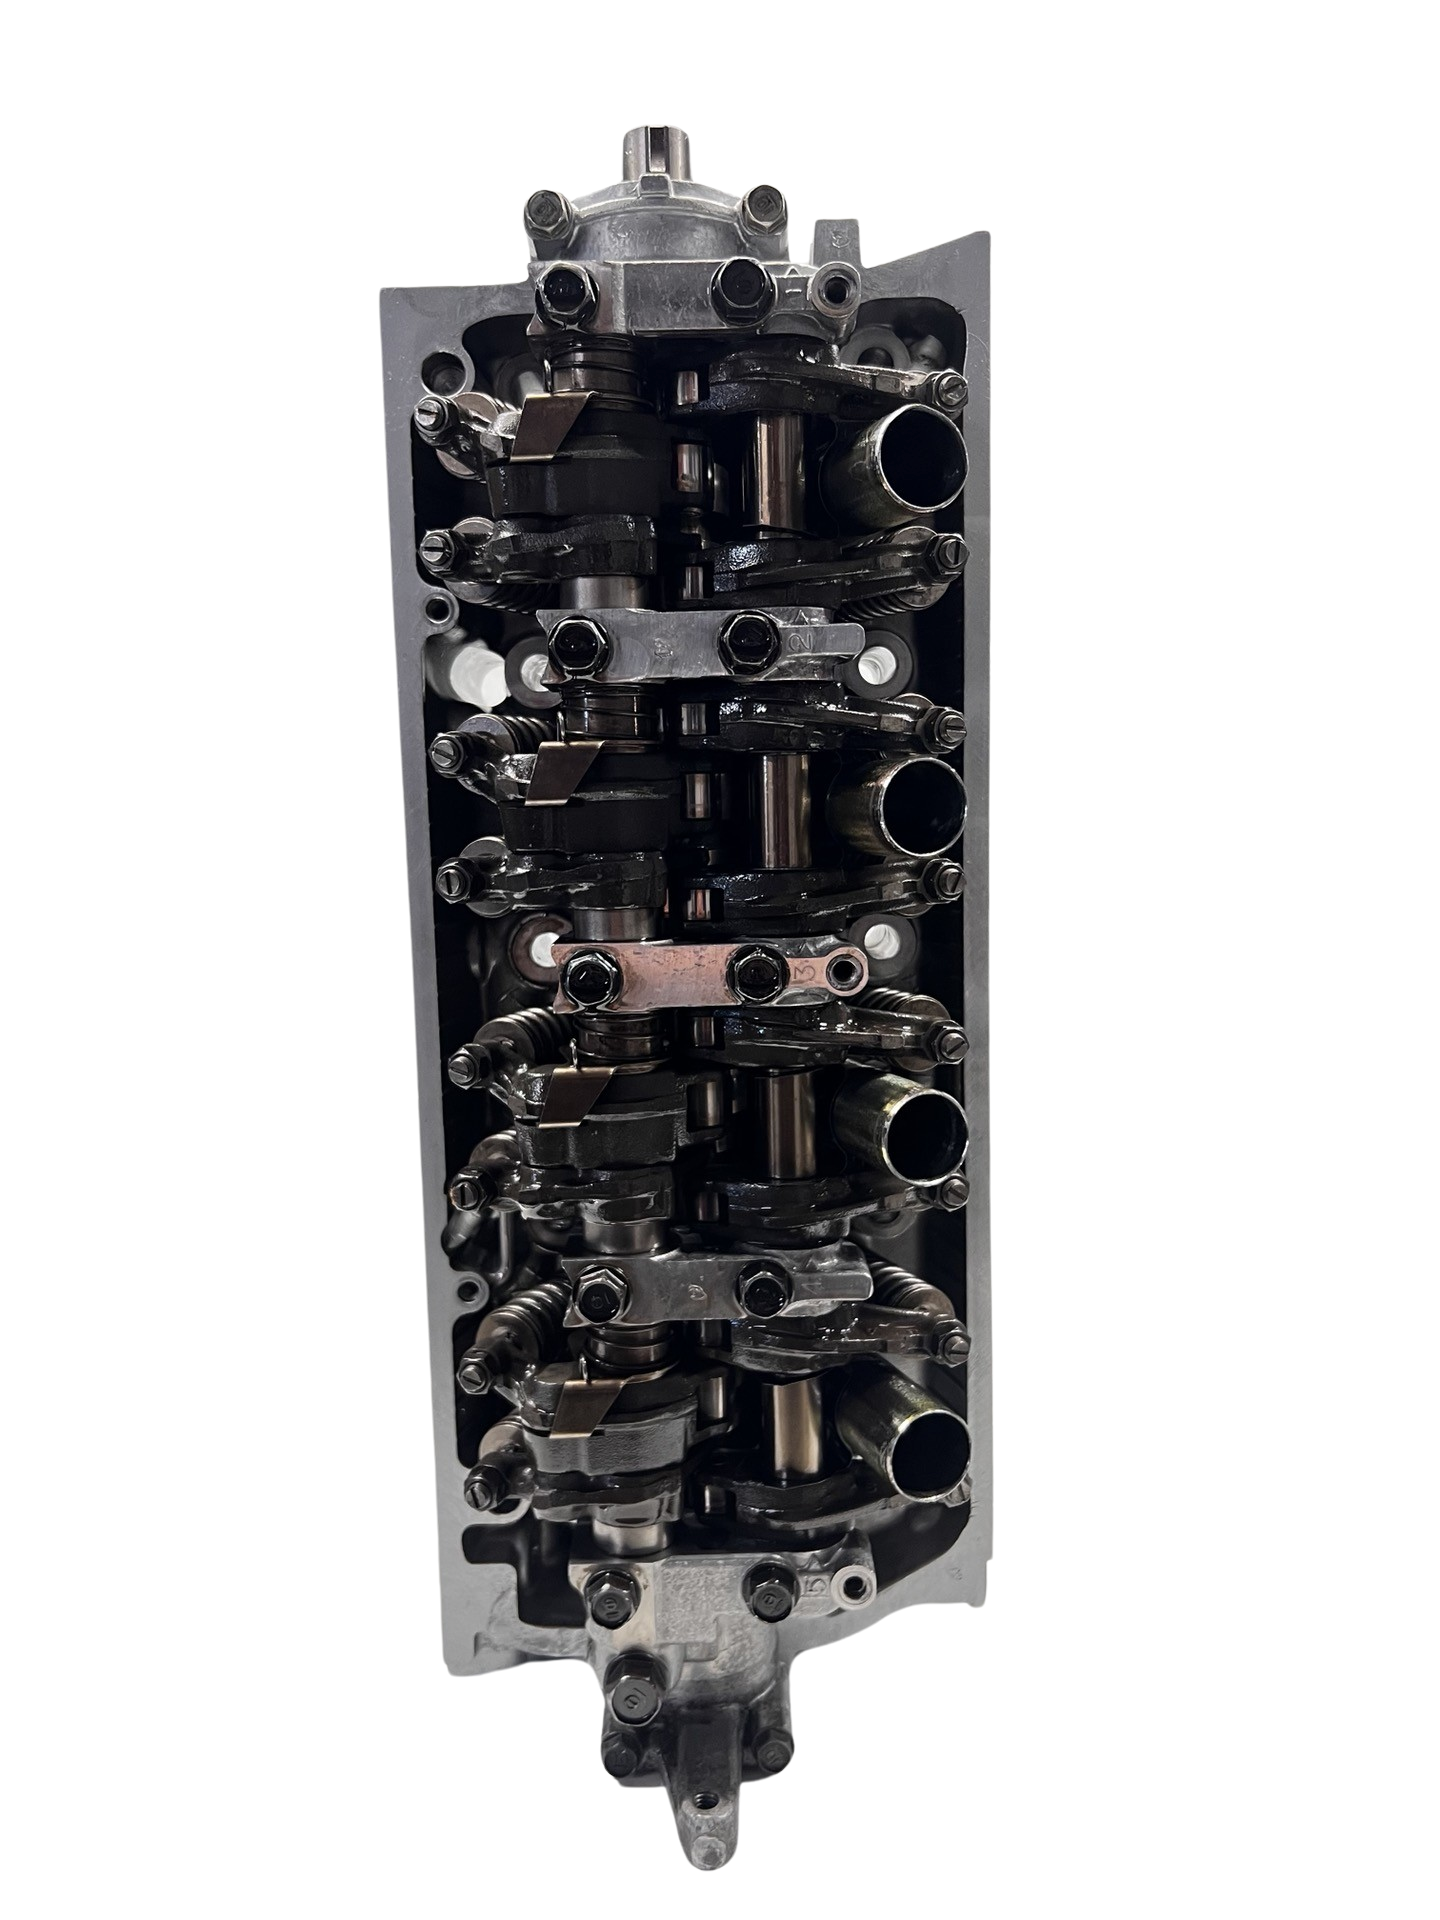 Top view of cylinder head for a Honda 1.6L Casting #P2J VTEC